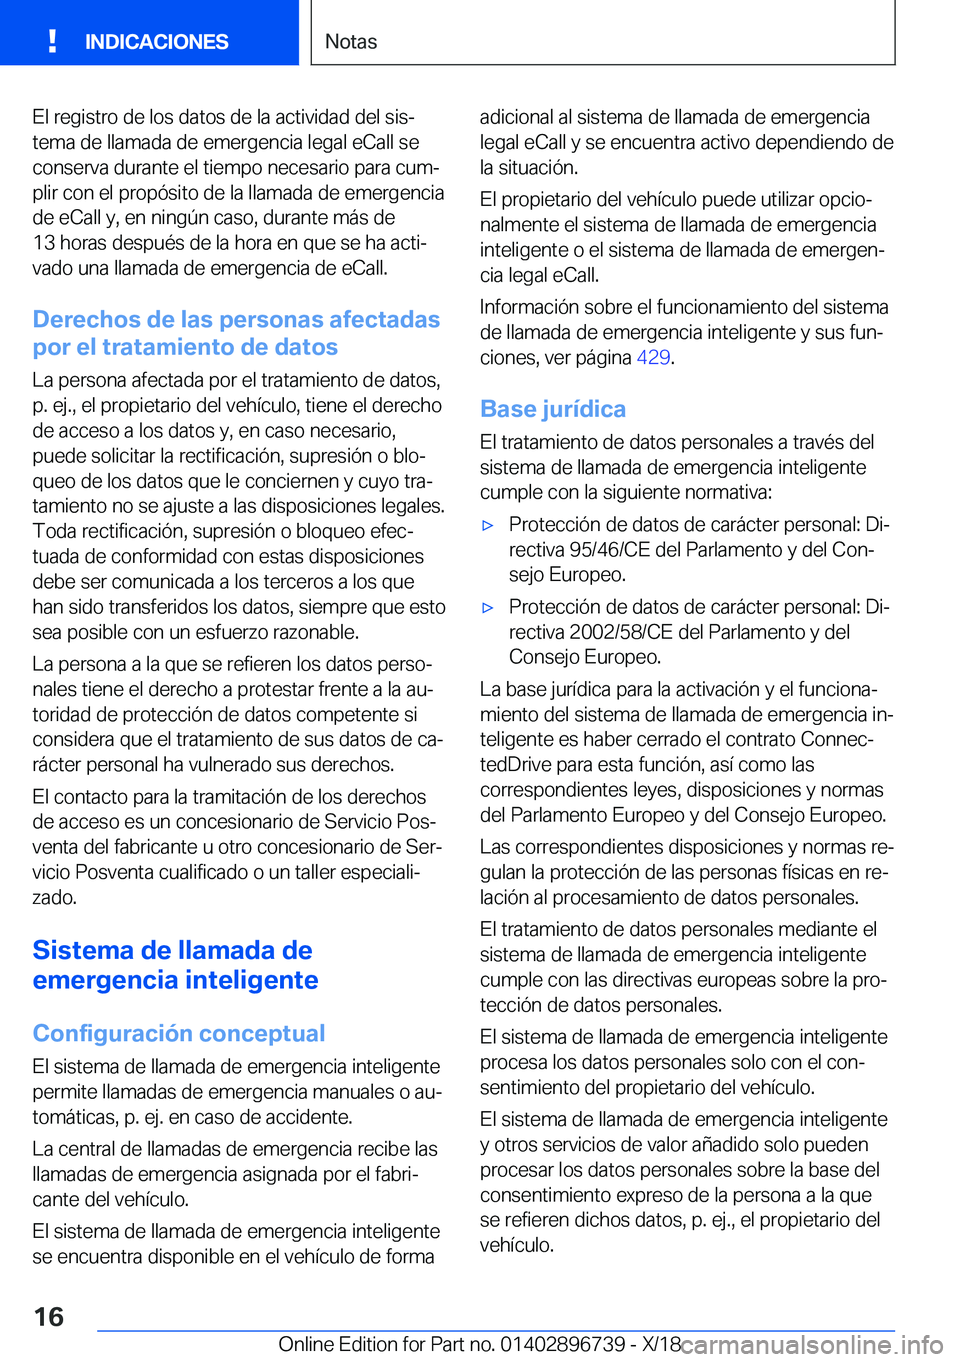 BMW X5 2019  Manuales de Empleo (in Spanish) �E�l��r�e�g�i�s�t�r�o��d�e��l�o�s��d�a�t�o�s��d�e��l�a��a�c�t�i�v�i�d�a�d��d�e�l��s�i�sª�t�e�m�a��d�e��l�l�a�m�a�d�a��d�e��e�m�e�r�g�e�n�c�i�a��l�e�g�a�l��e�C�a�l�l��s�e
�c�o�n�s�e�r